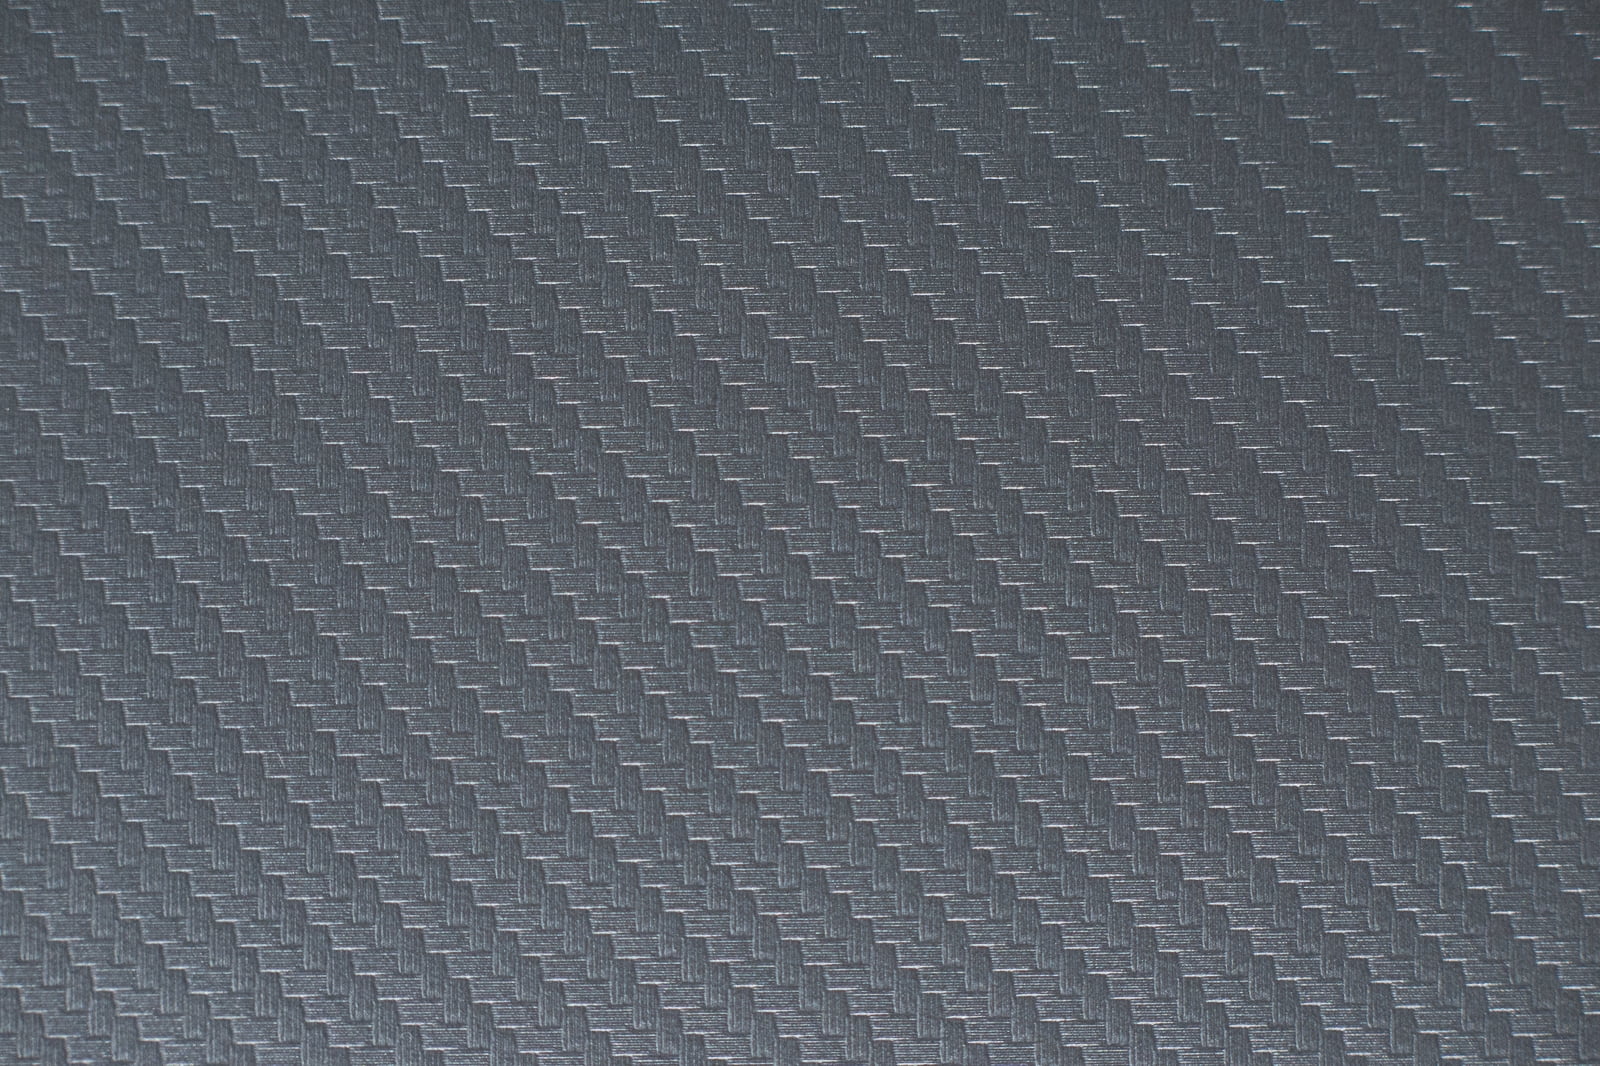 GRAY : Upholstery Vinyl 54 in x 3 yds Marine / Automotive Carbon Fiber